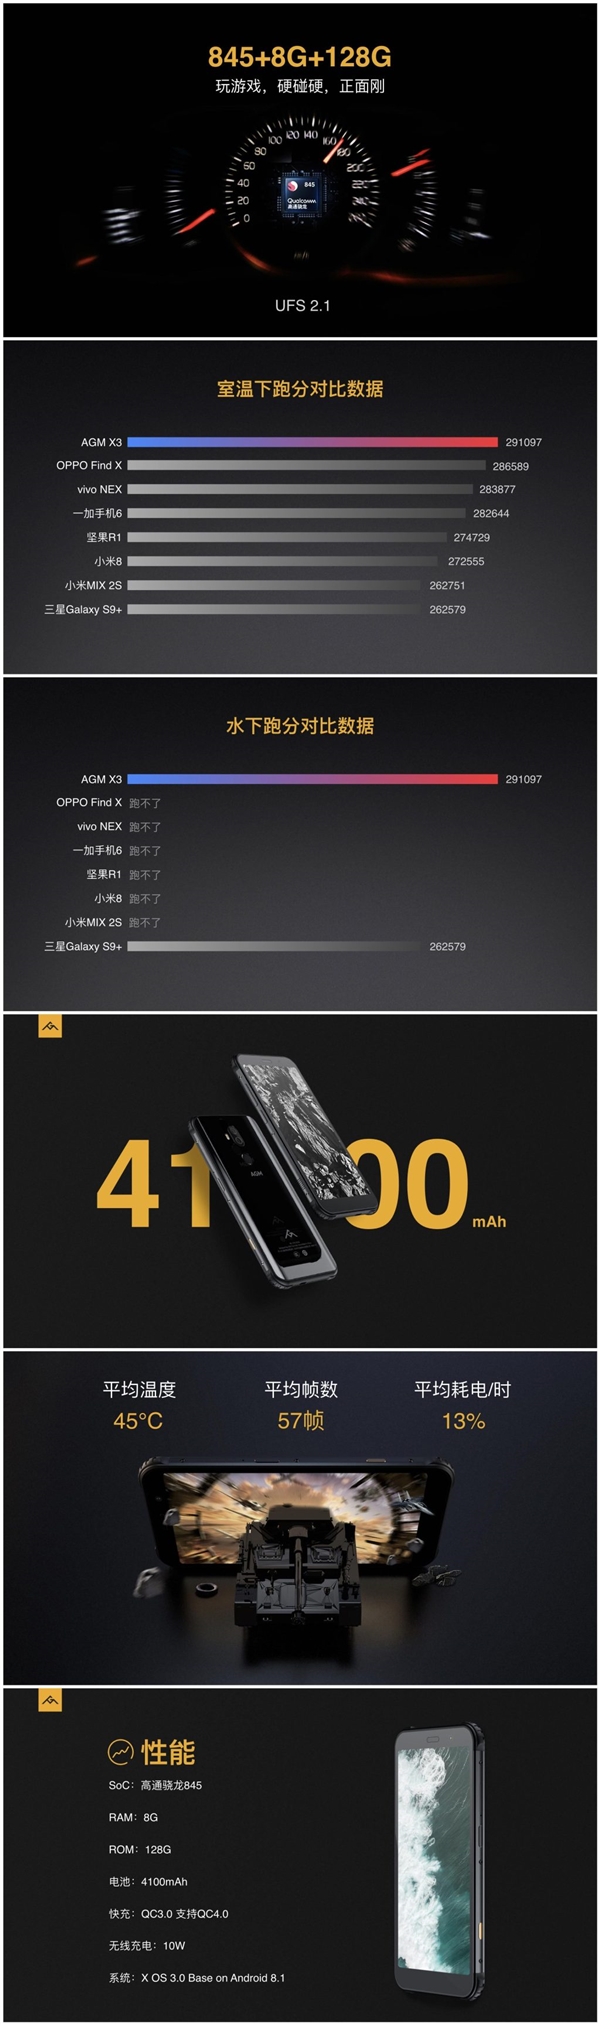 AGM X3户外手机公布：骁龙845 8G运行内存 3999元